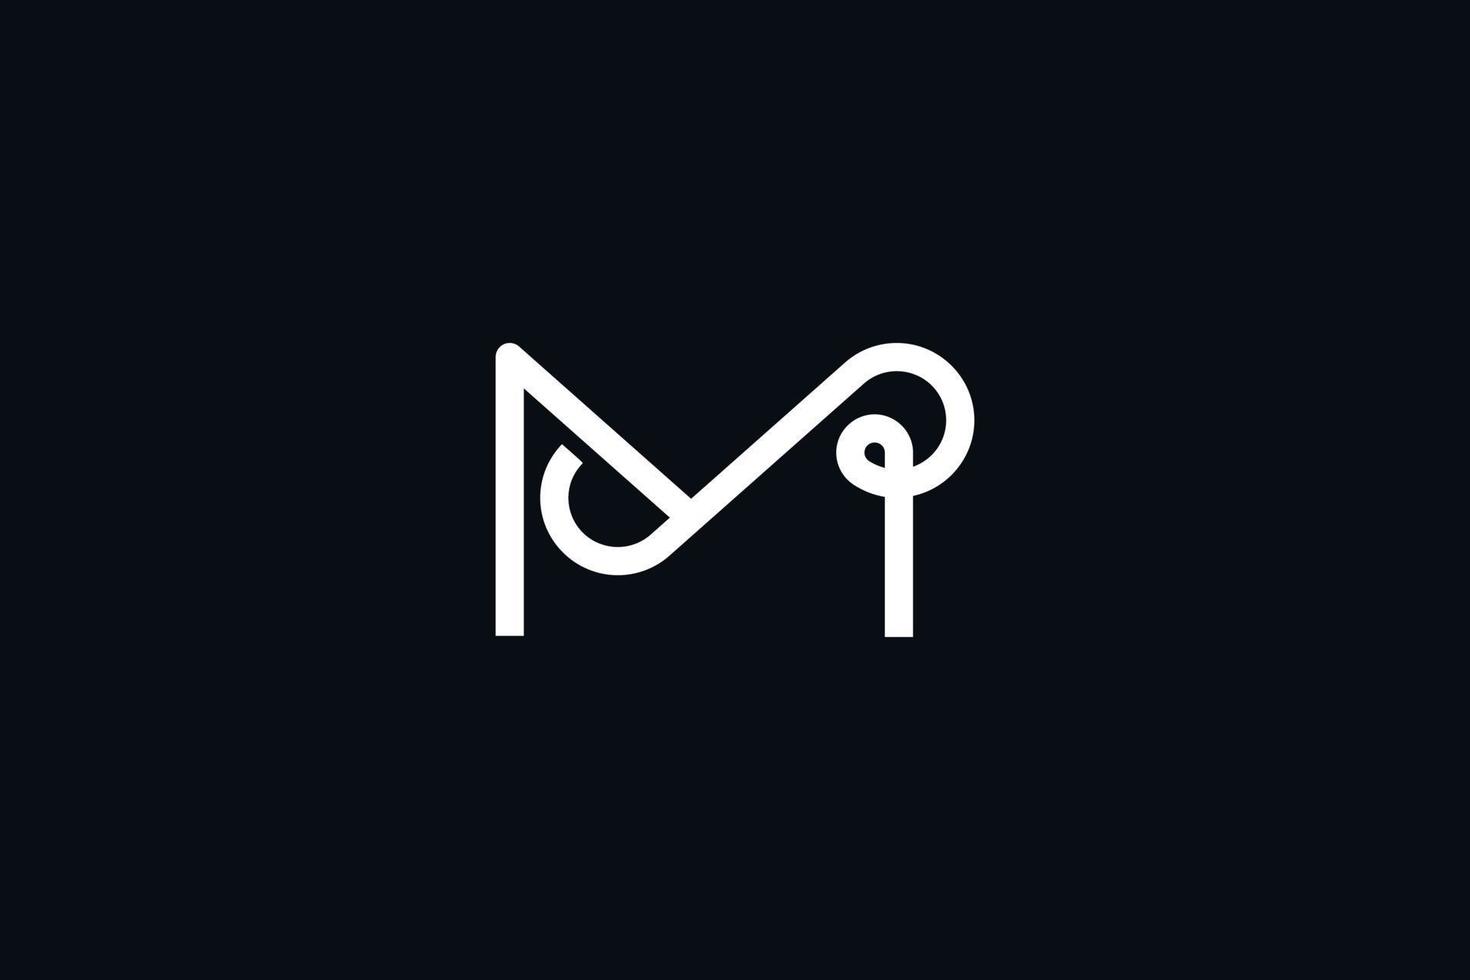 Initial Letter SM Logo or MS Logo Design Vector